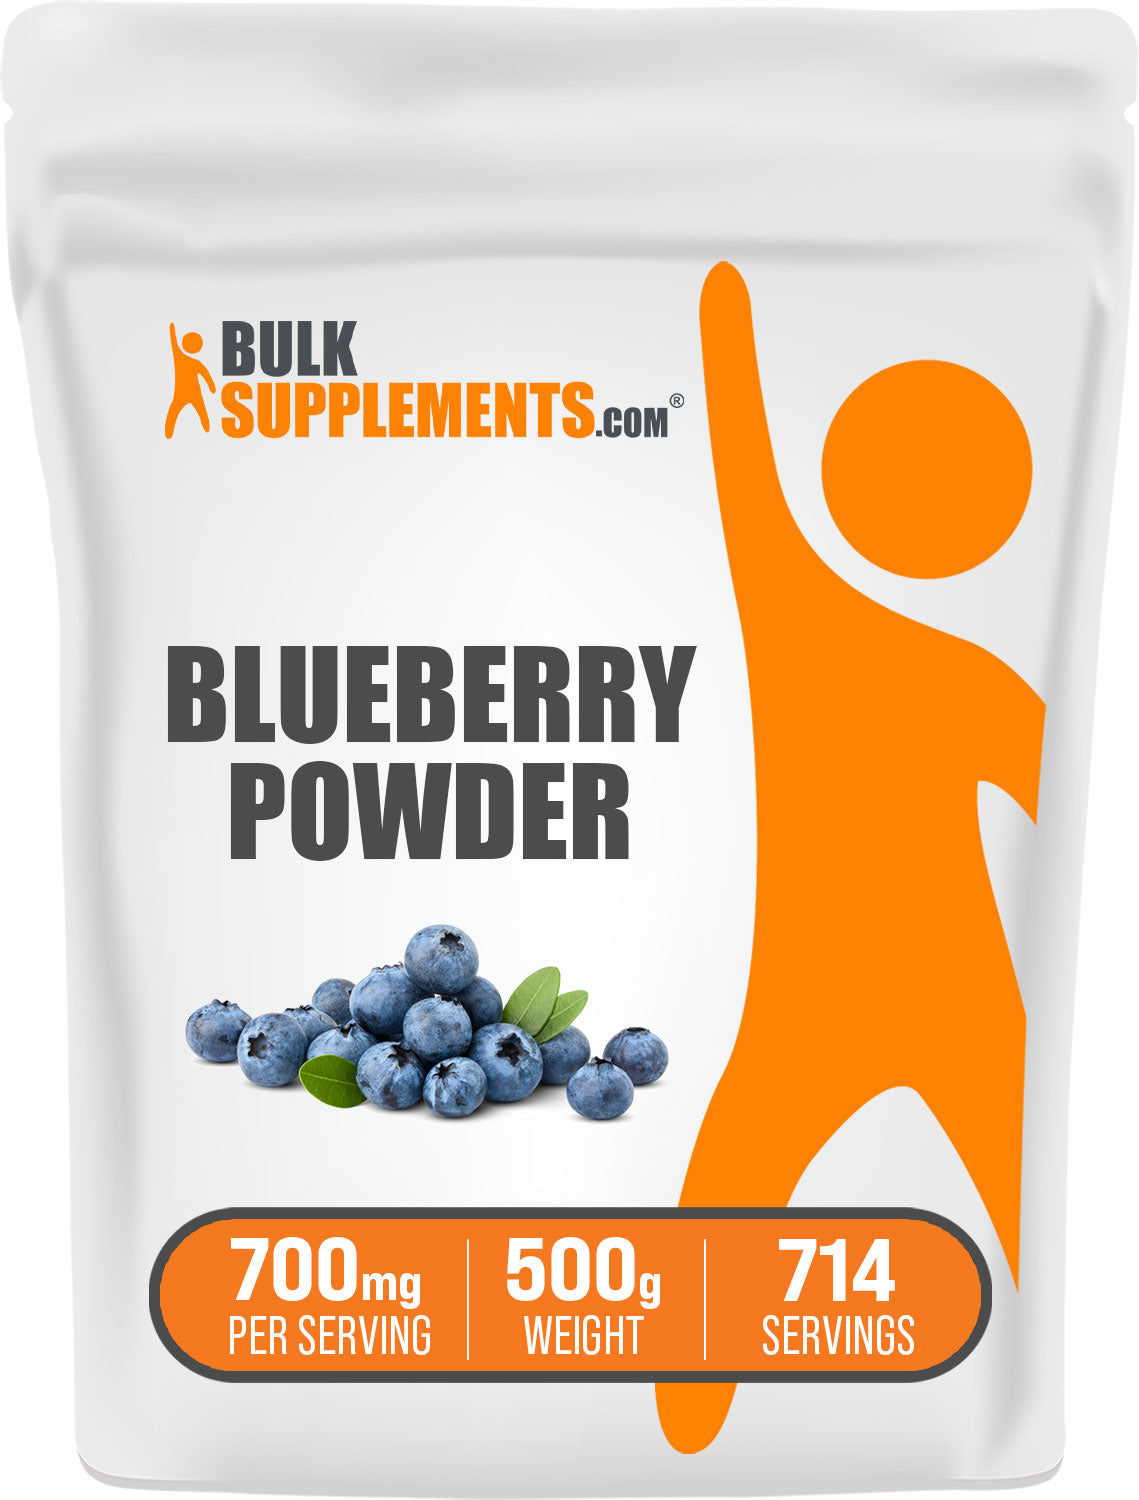 500g of Blueberry Powder